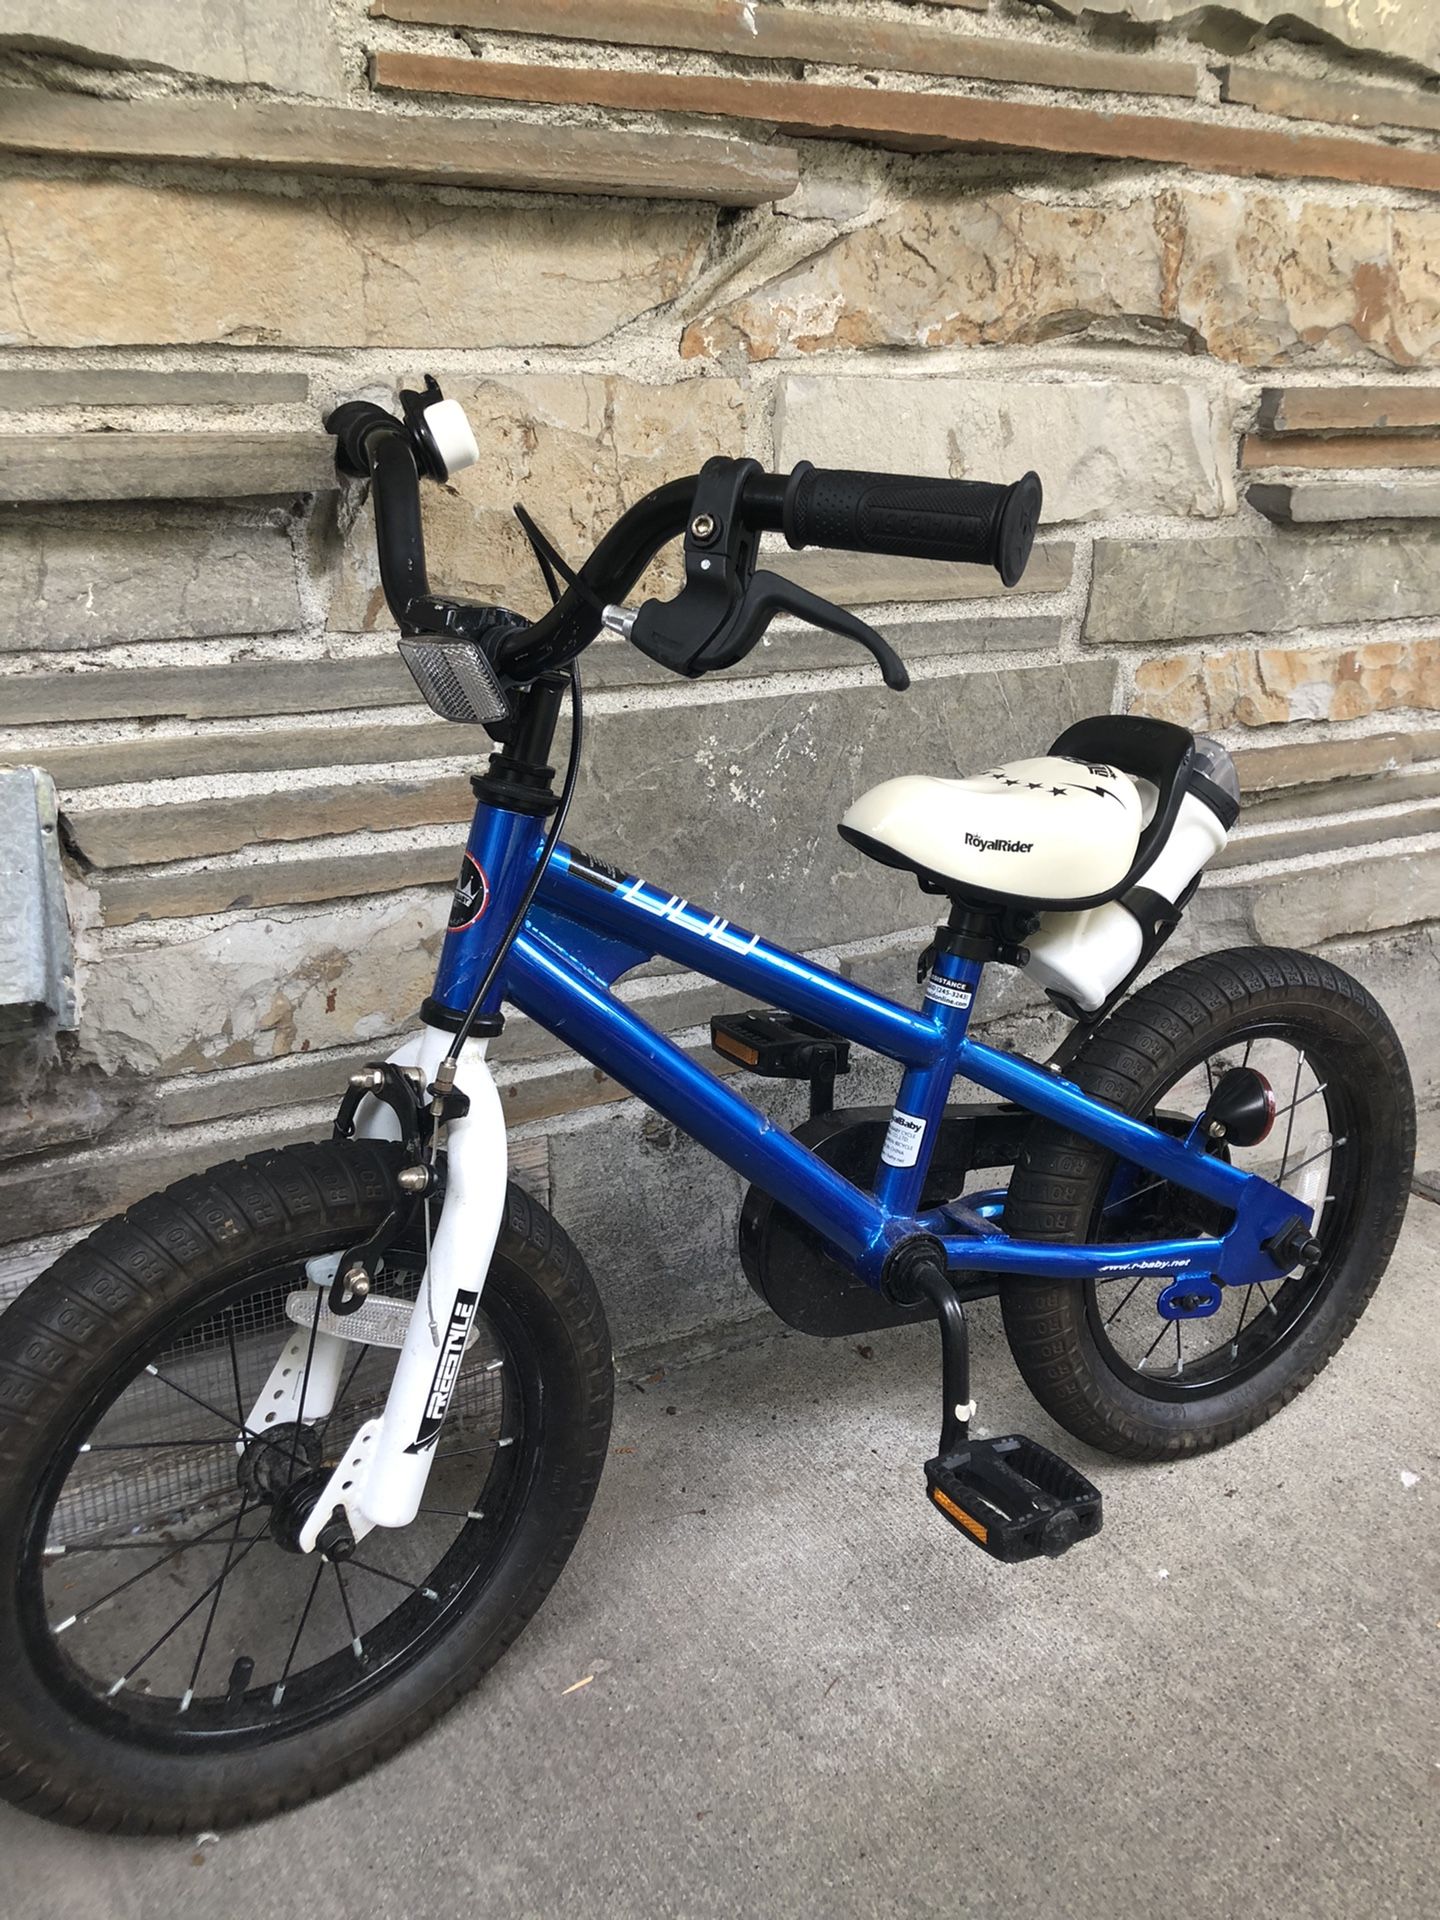 RoyalBaby Toddler Bike